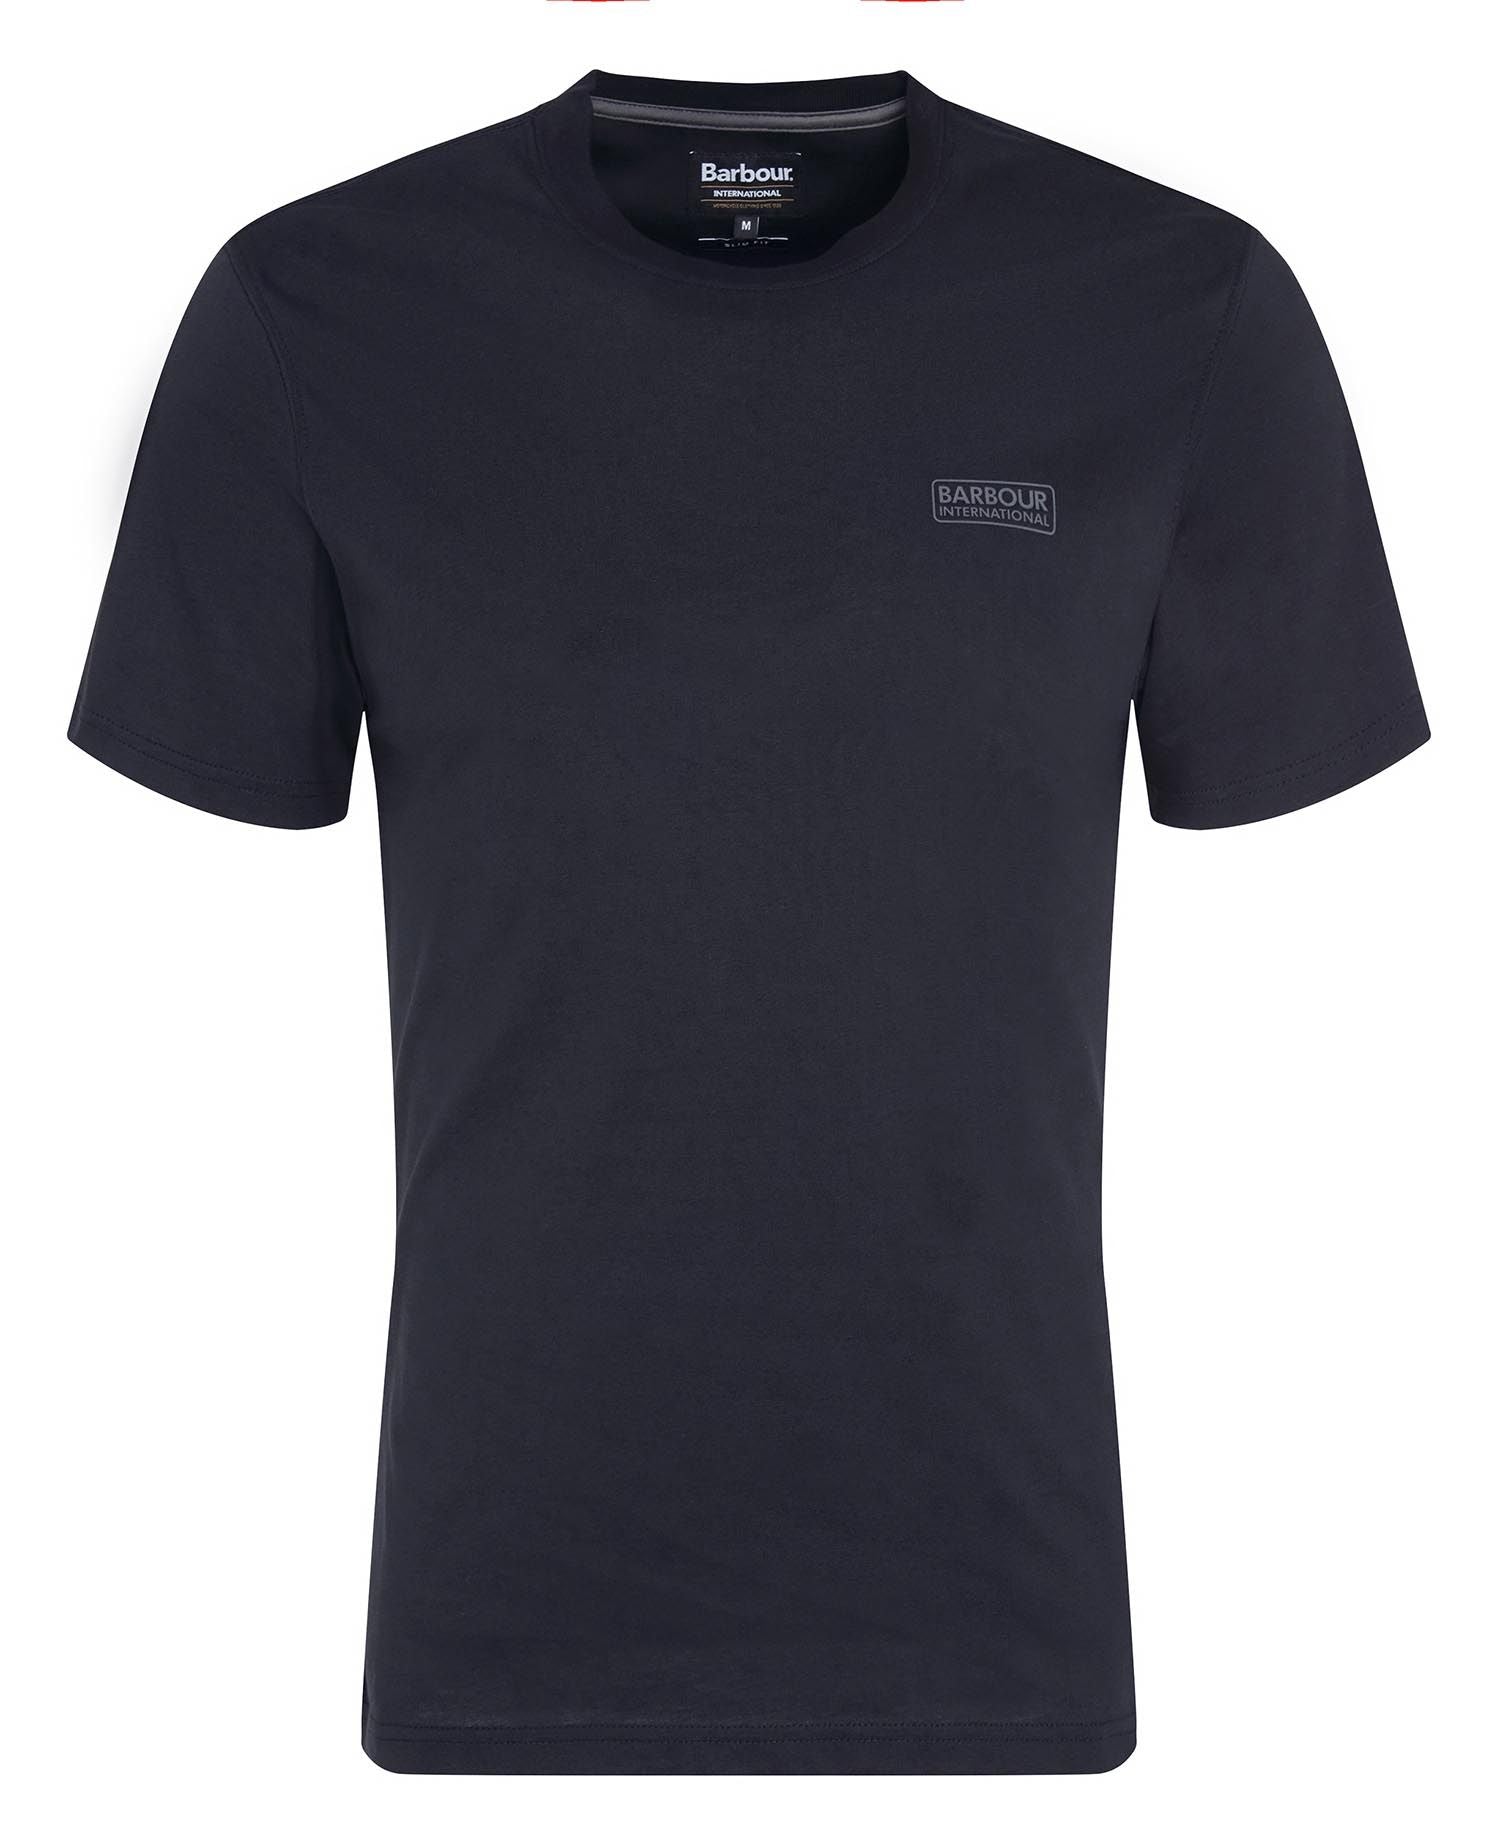 Barbour T-Shirt Uomo Essential-Black Pewter